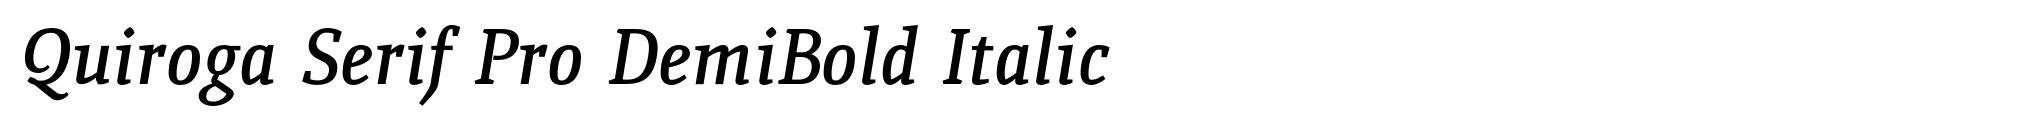 Quiroga Serif Pro DemiBold Italic image